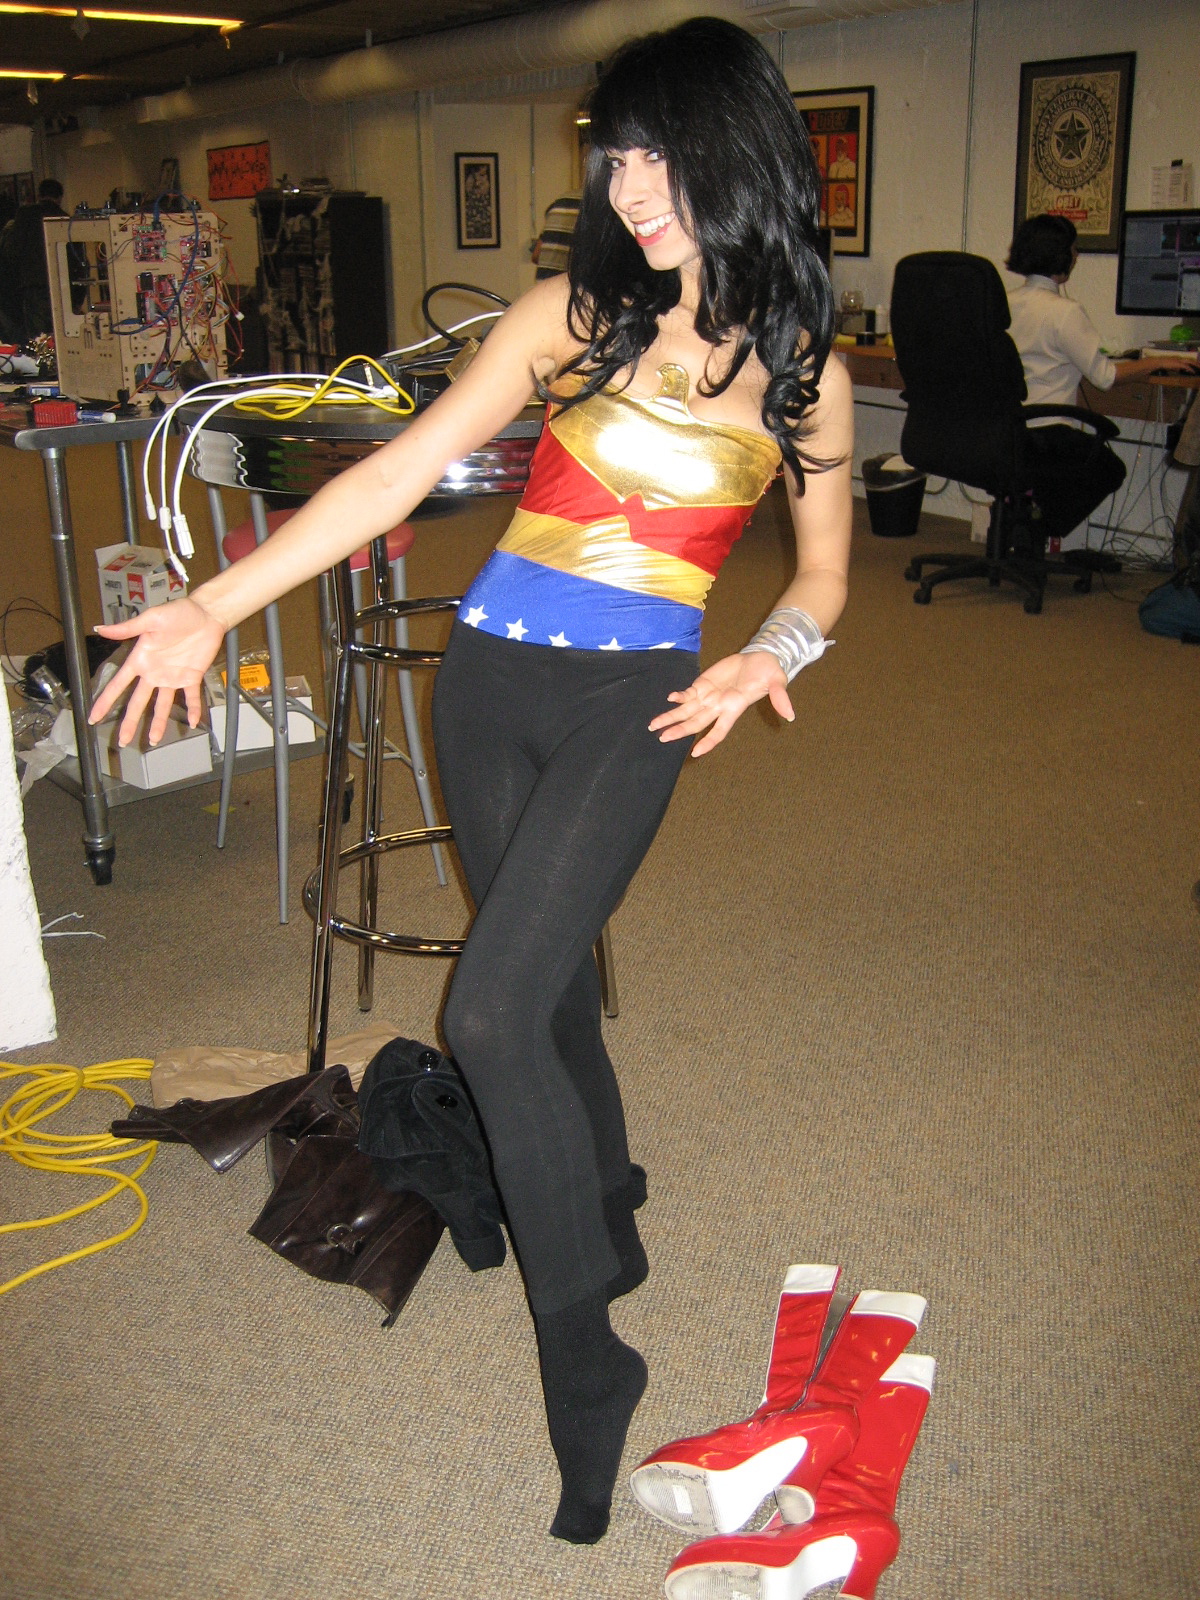  Wonder Woman with pants.  